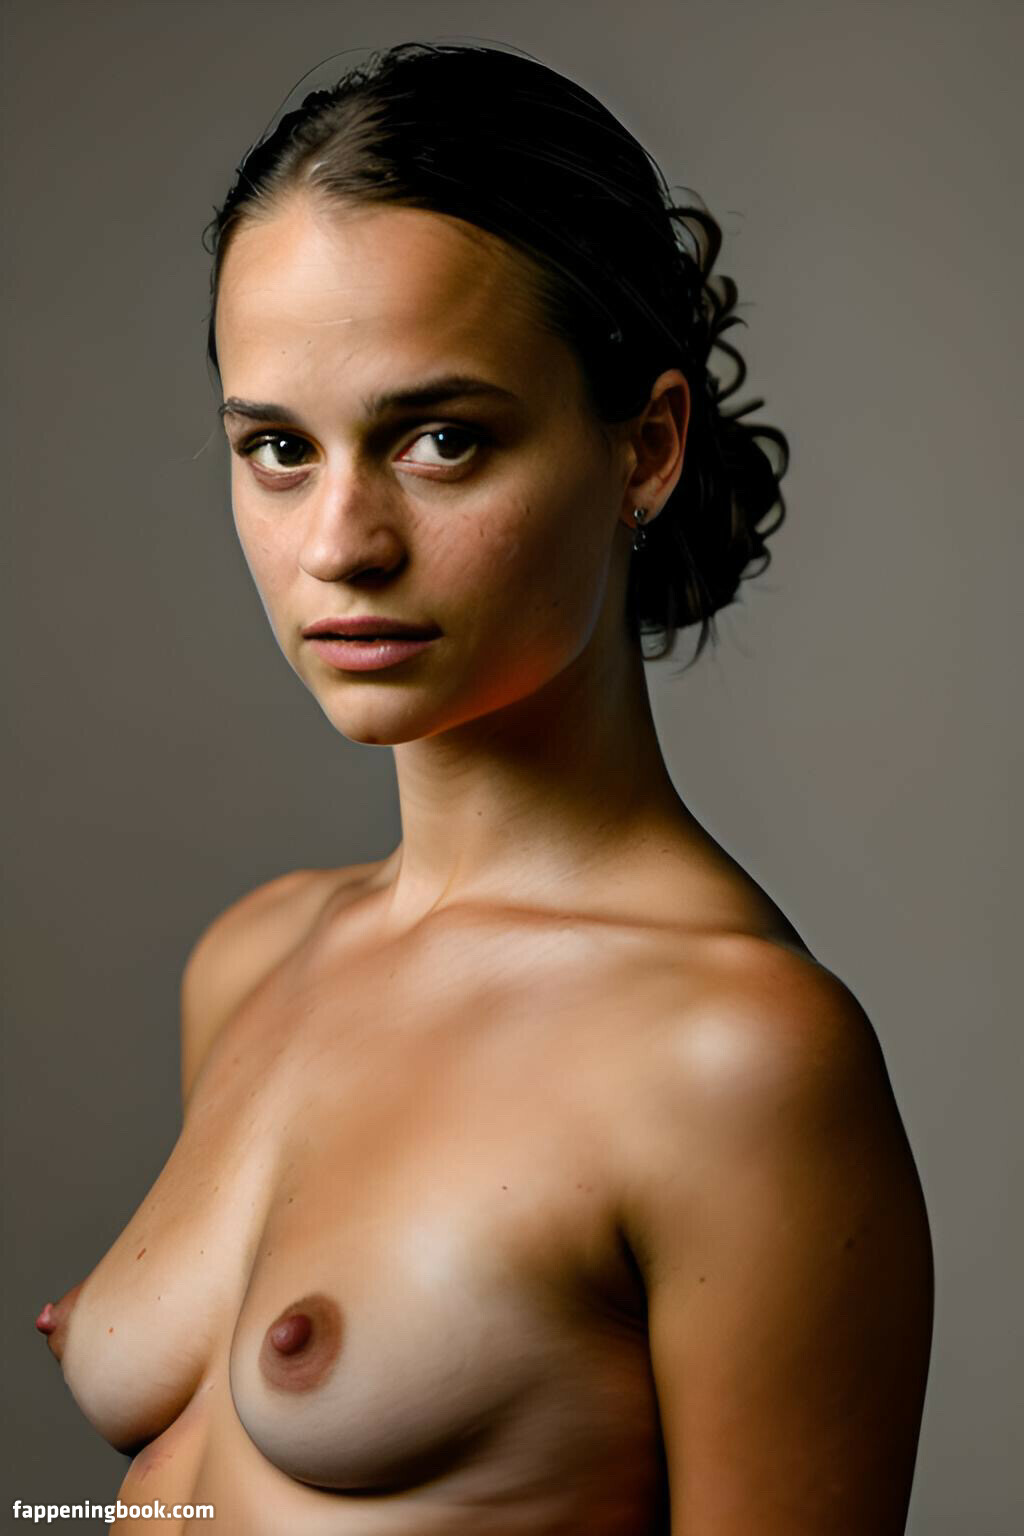 https://fappeningbook.com/photos/a/i/ai-generated-celebrity-nudes/1000/220.jpg